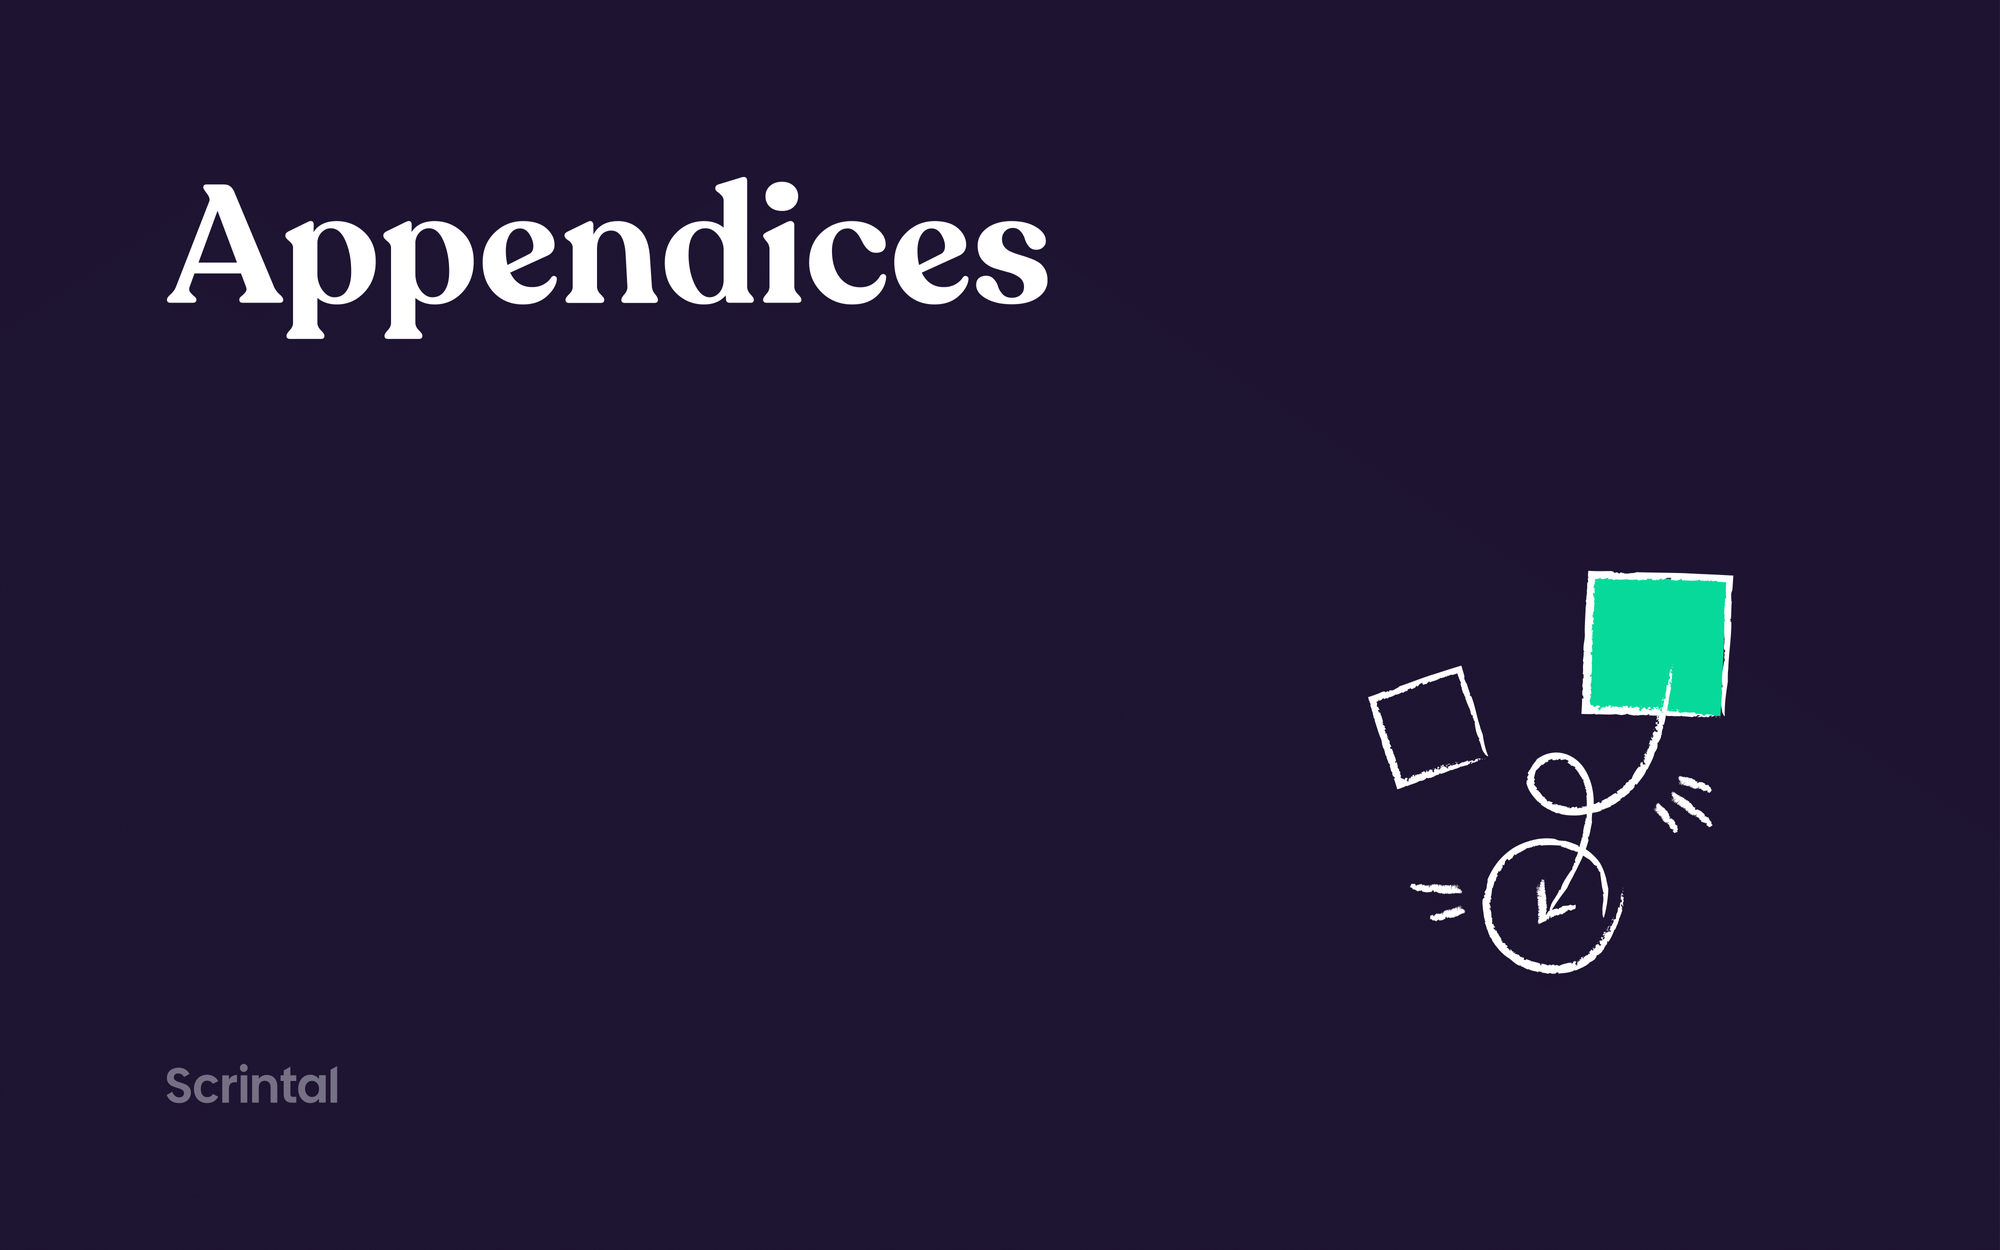 Appendices slide